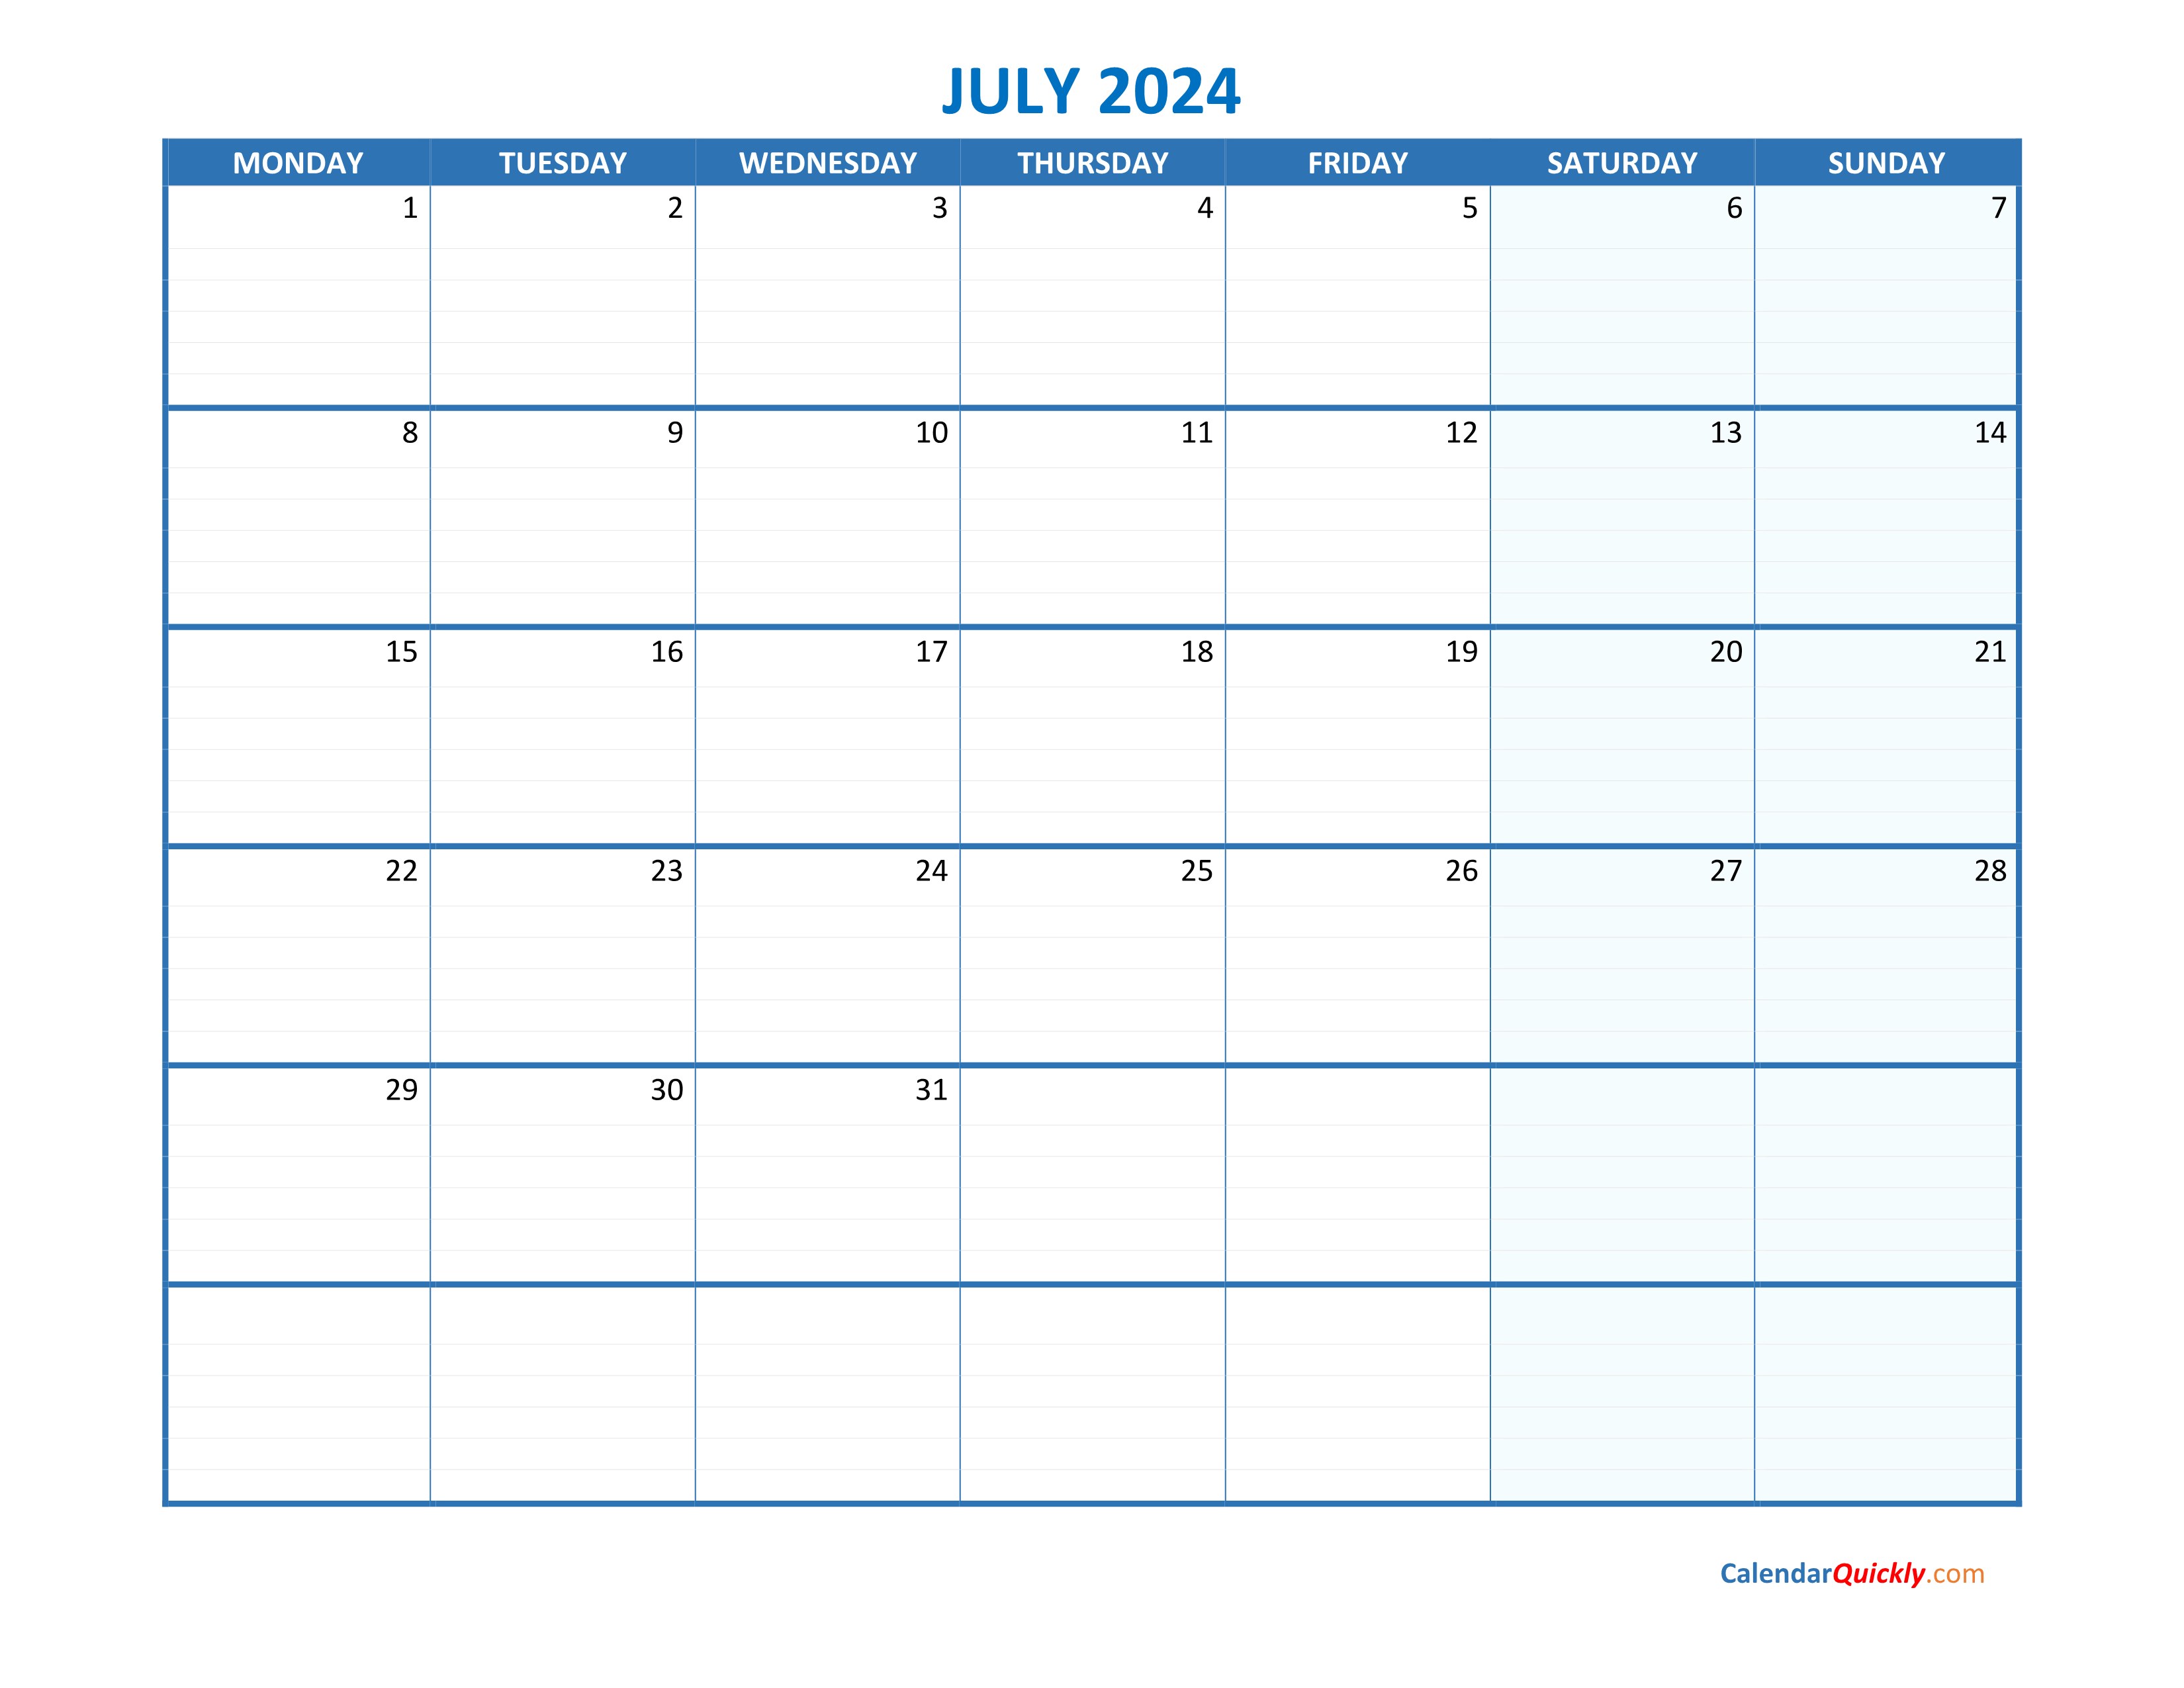 July Monday 2024 Blank Calendar | Calendar Quickly